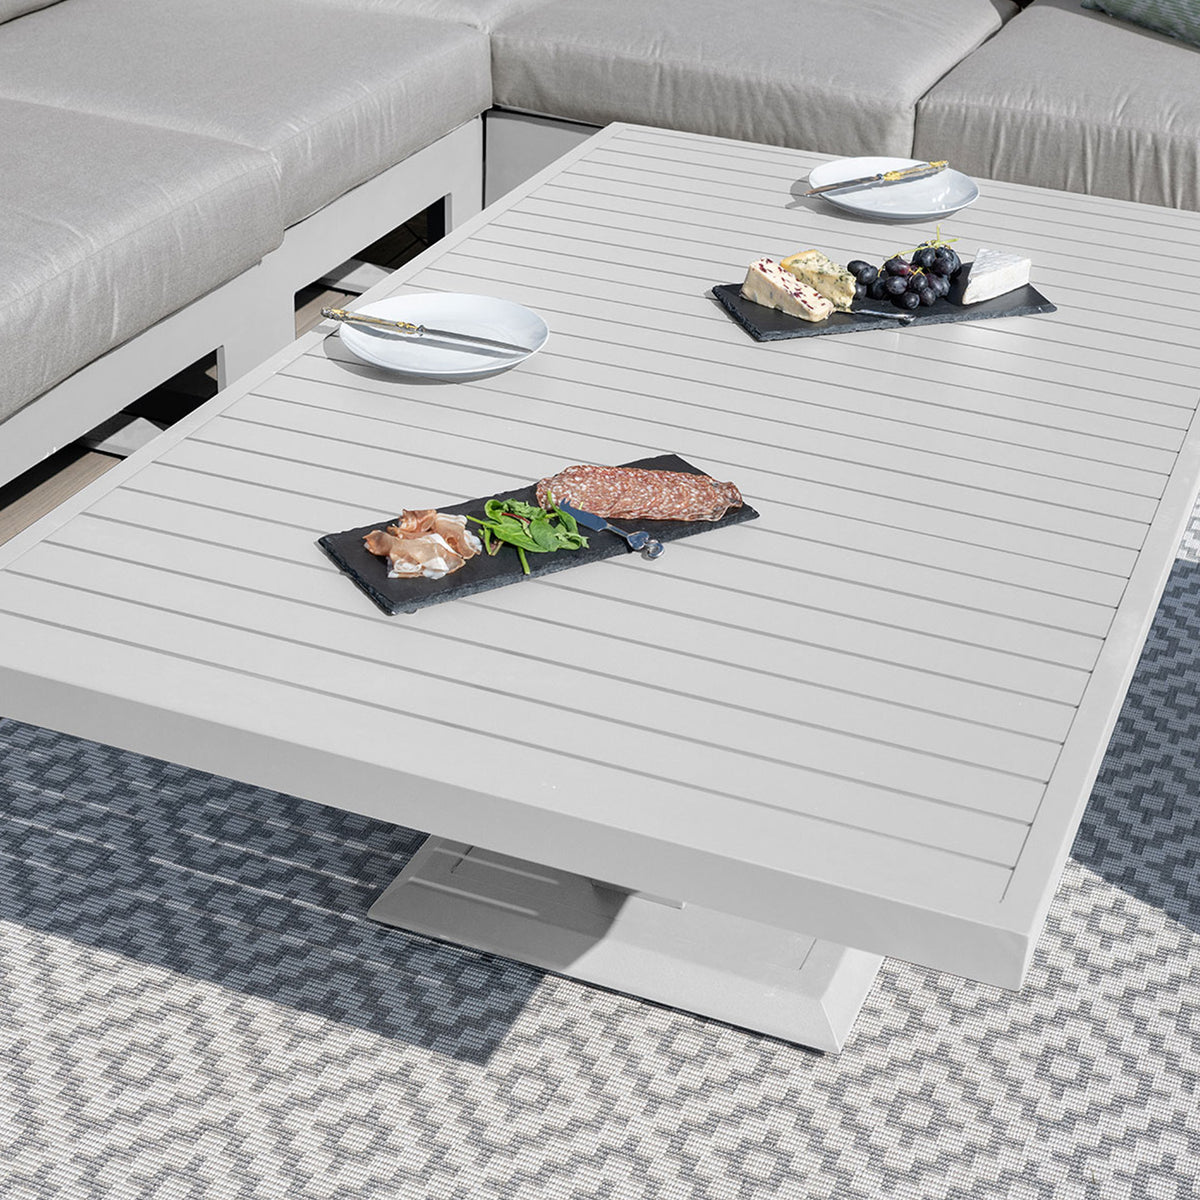 Maze Amalfi White Large Outdoor Corner Dining Set with Rectangular Rising Table